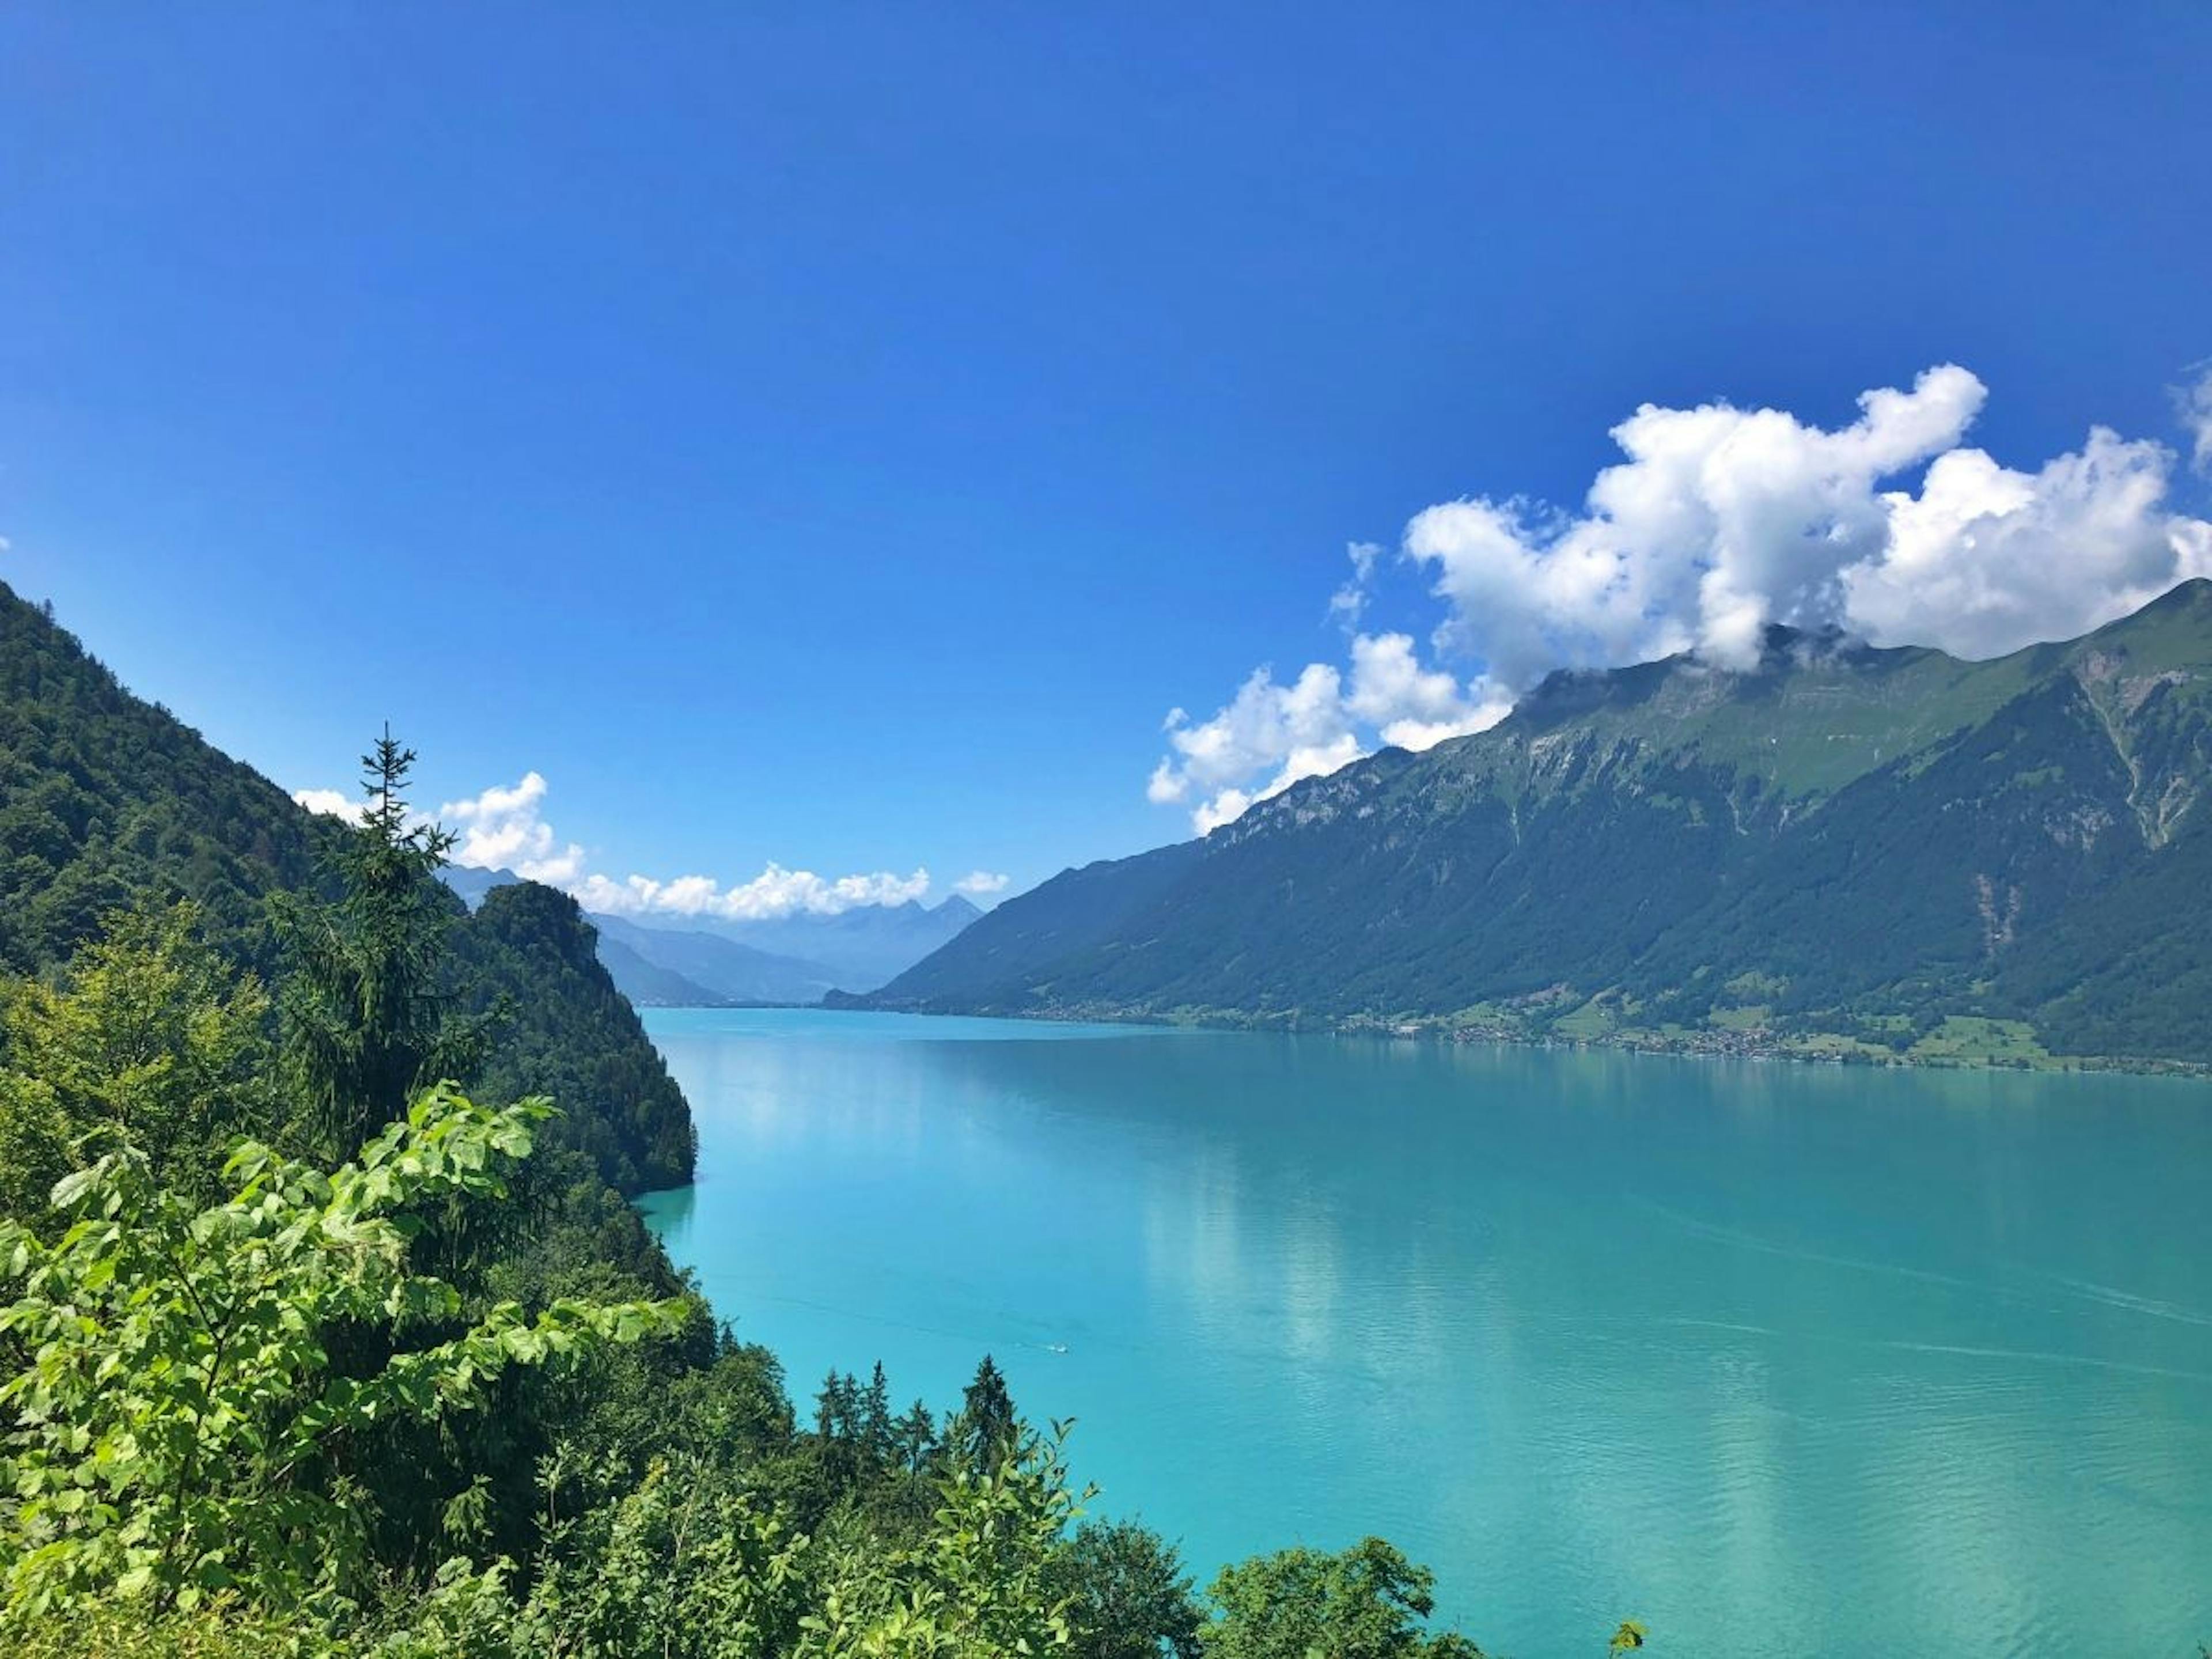 Swiss lakes